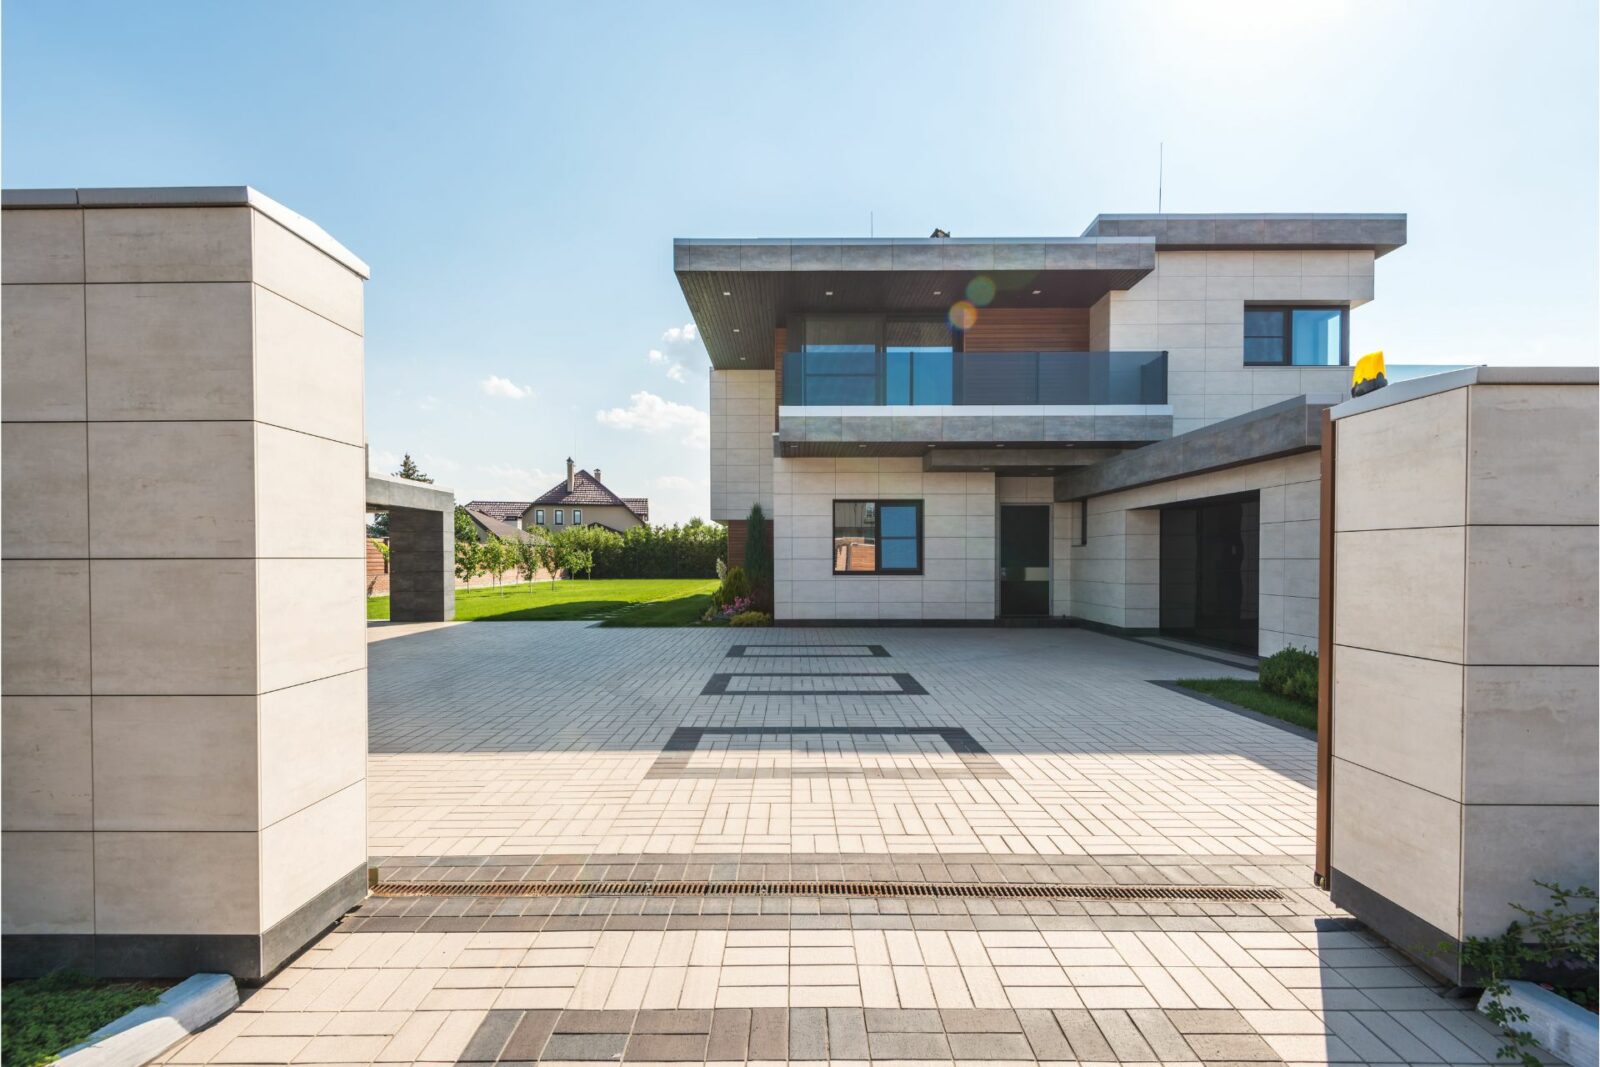 how to modernize the exterior of your home